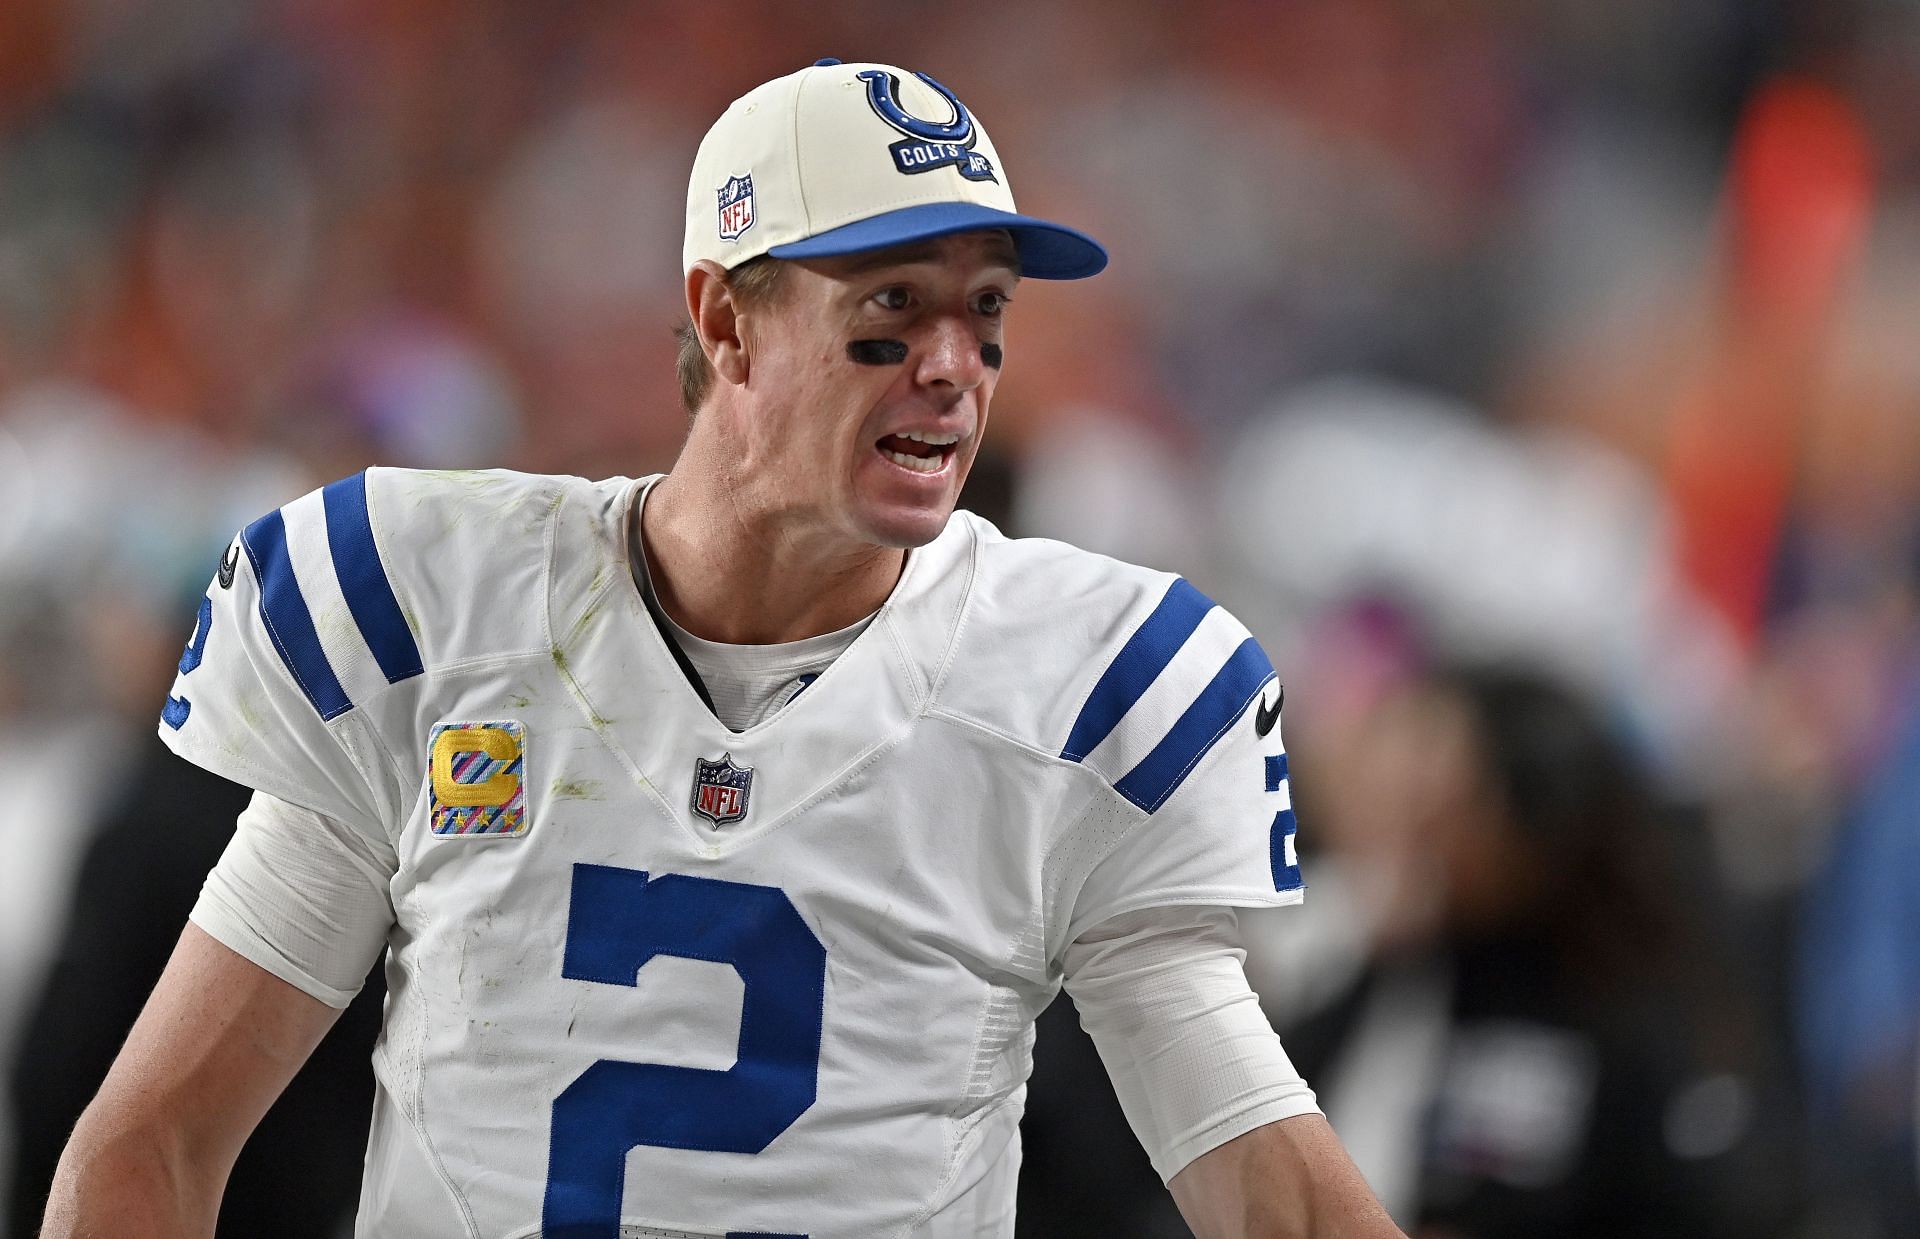 Colts bench former MVP Matt Ryan for second-year quarterback Sam Ehlinger, Indianapolis Colts